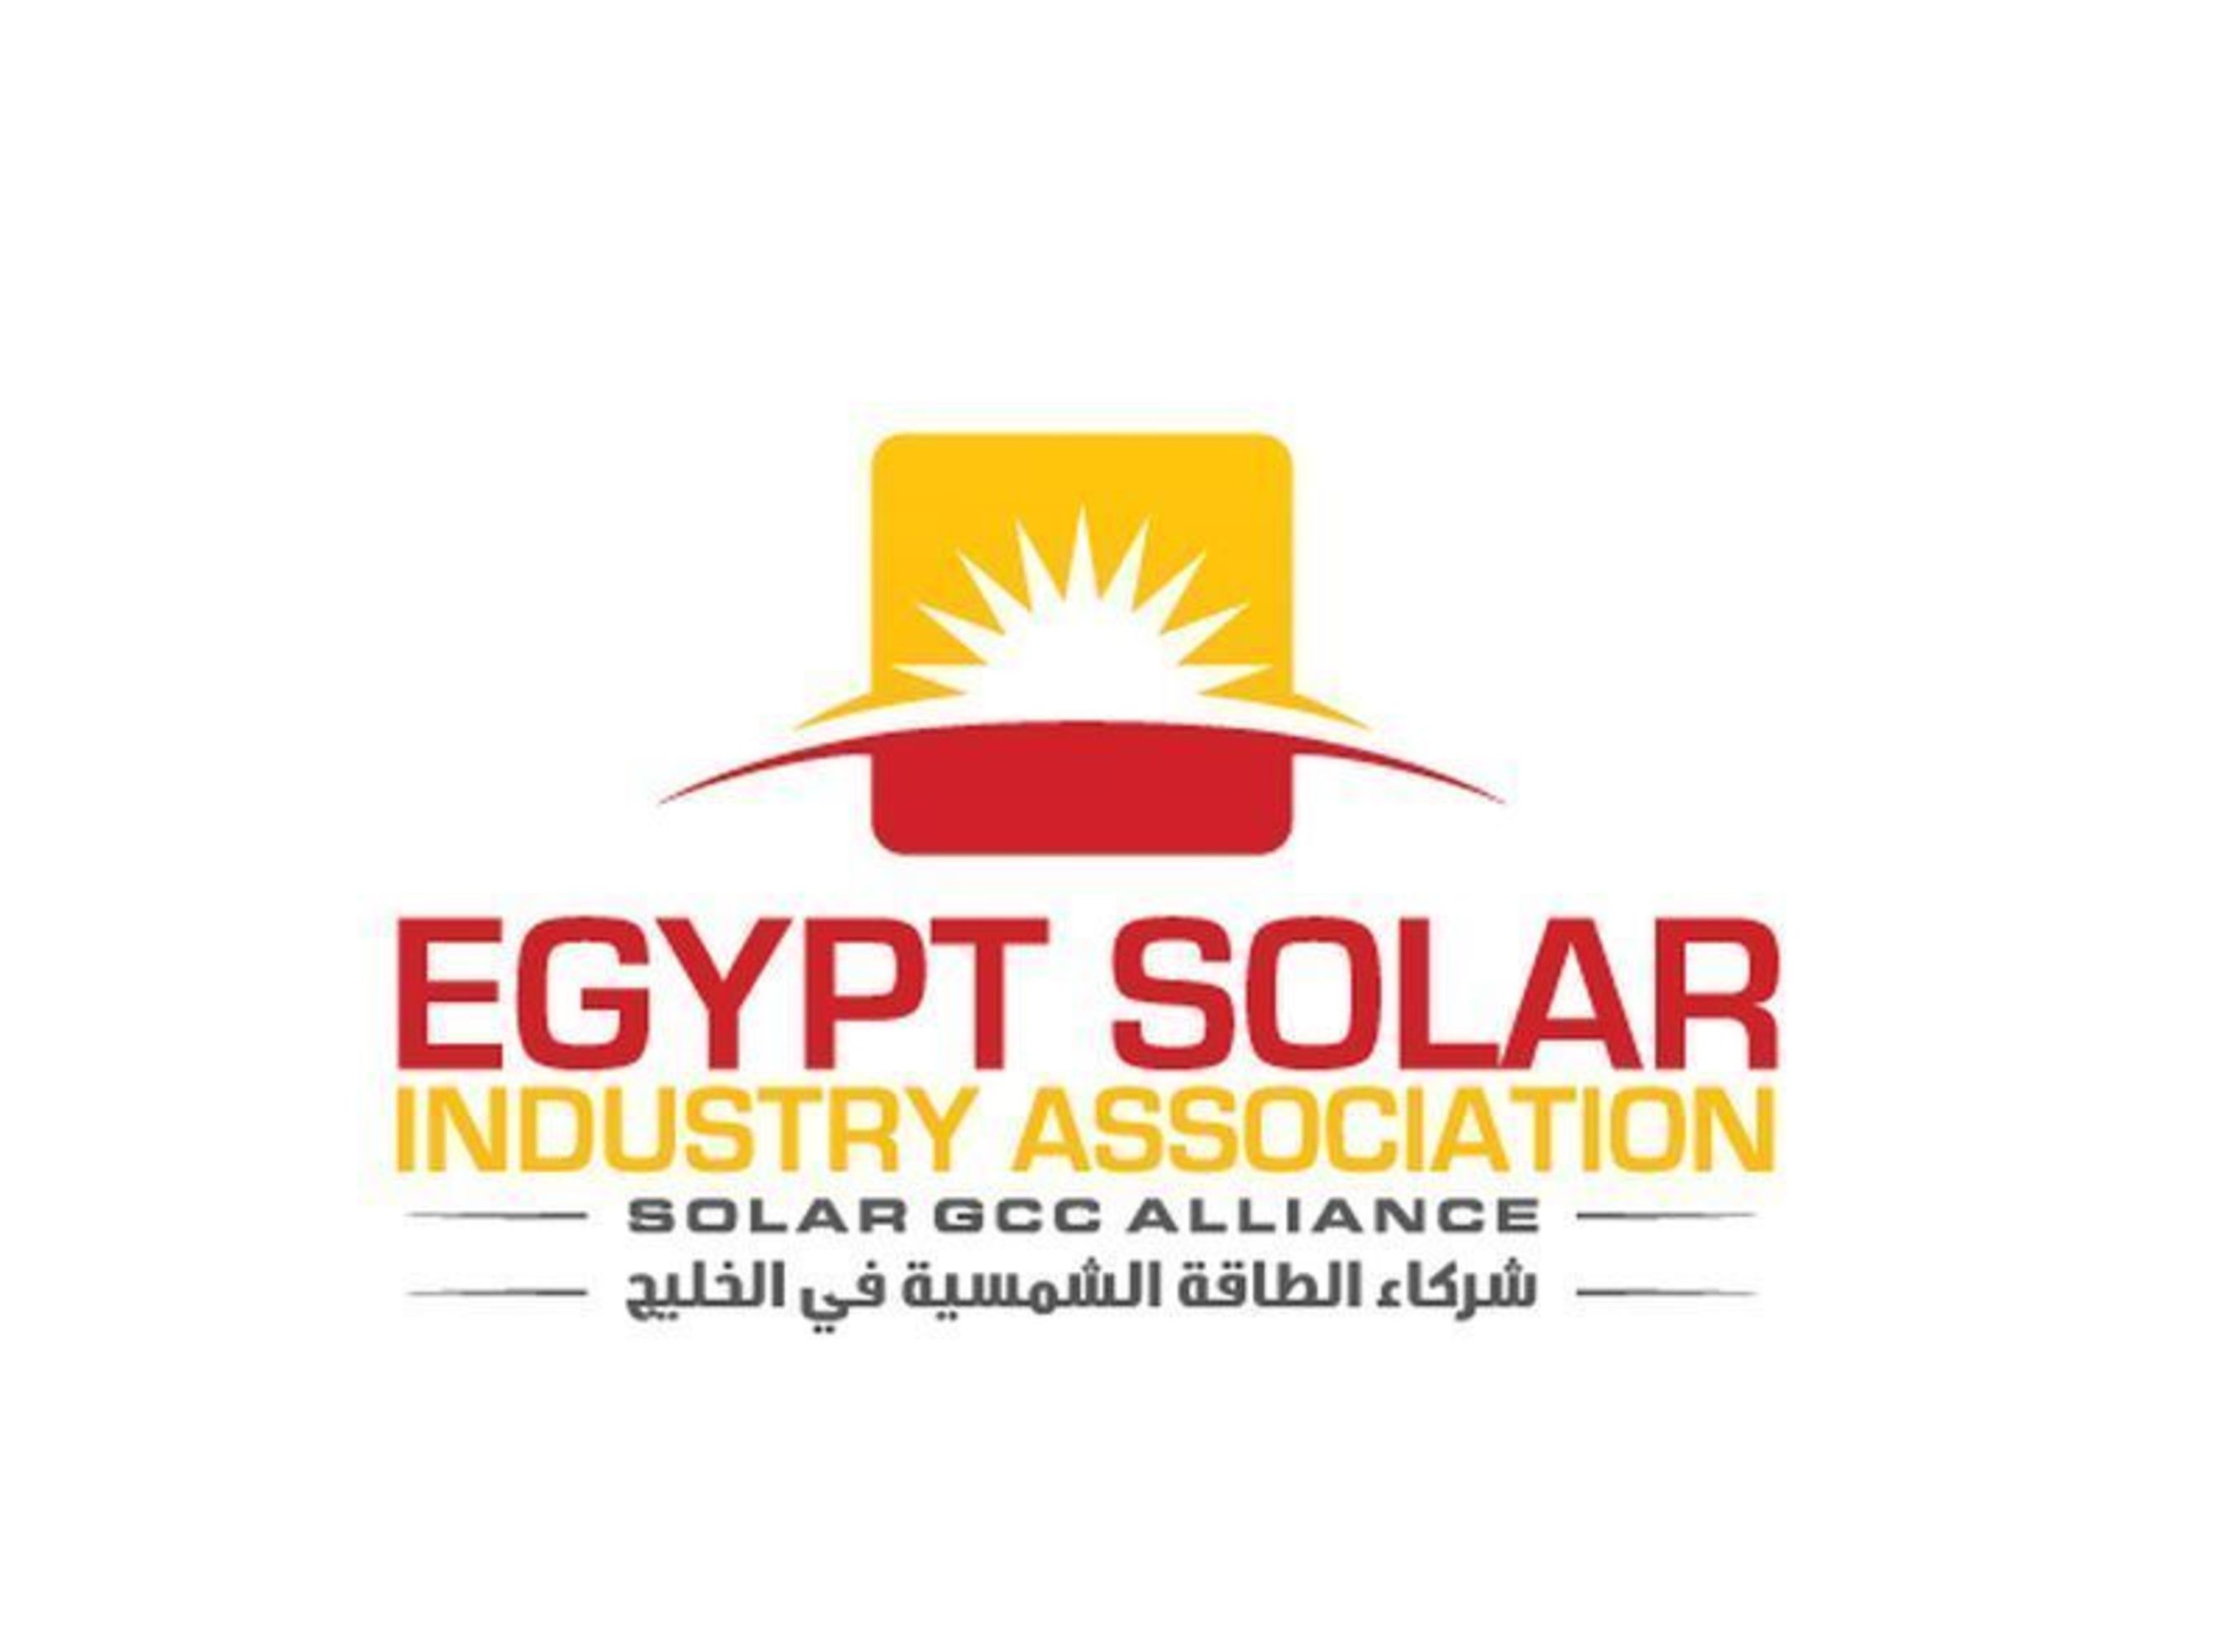 Egypt Solar Industry Association Logo (PRNewsFoto/Egypt Solar Industry Association)